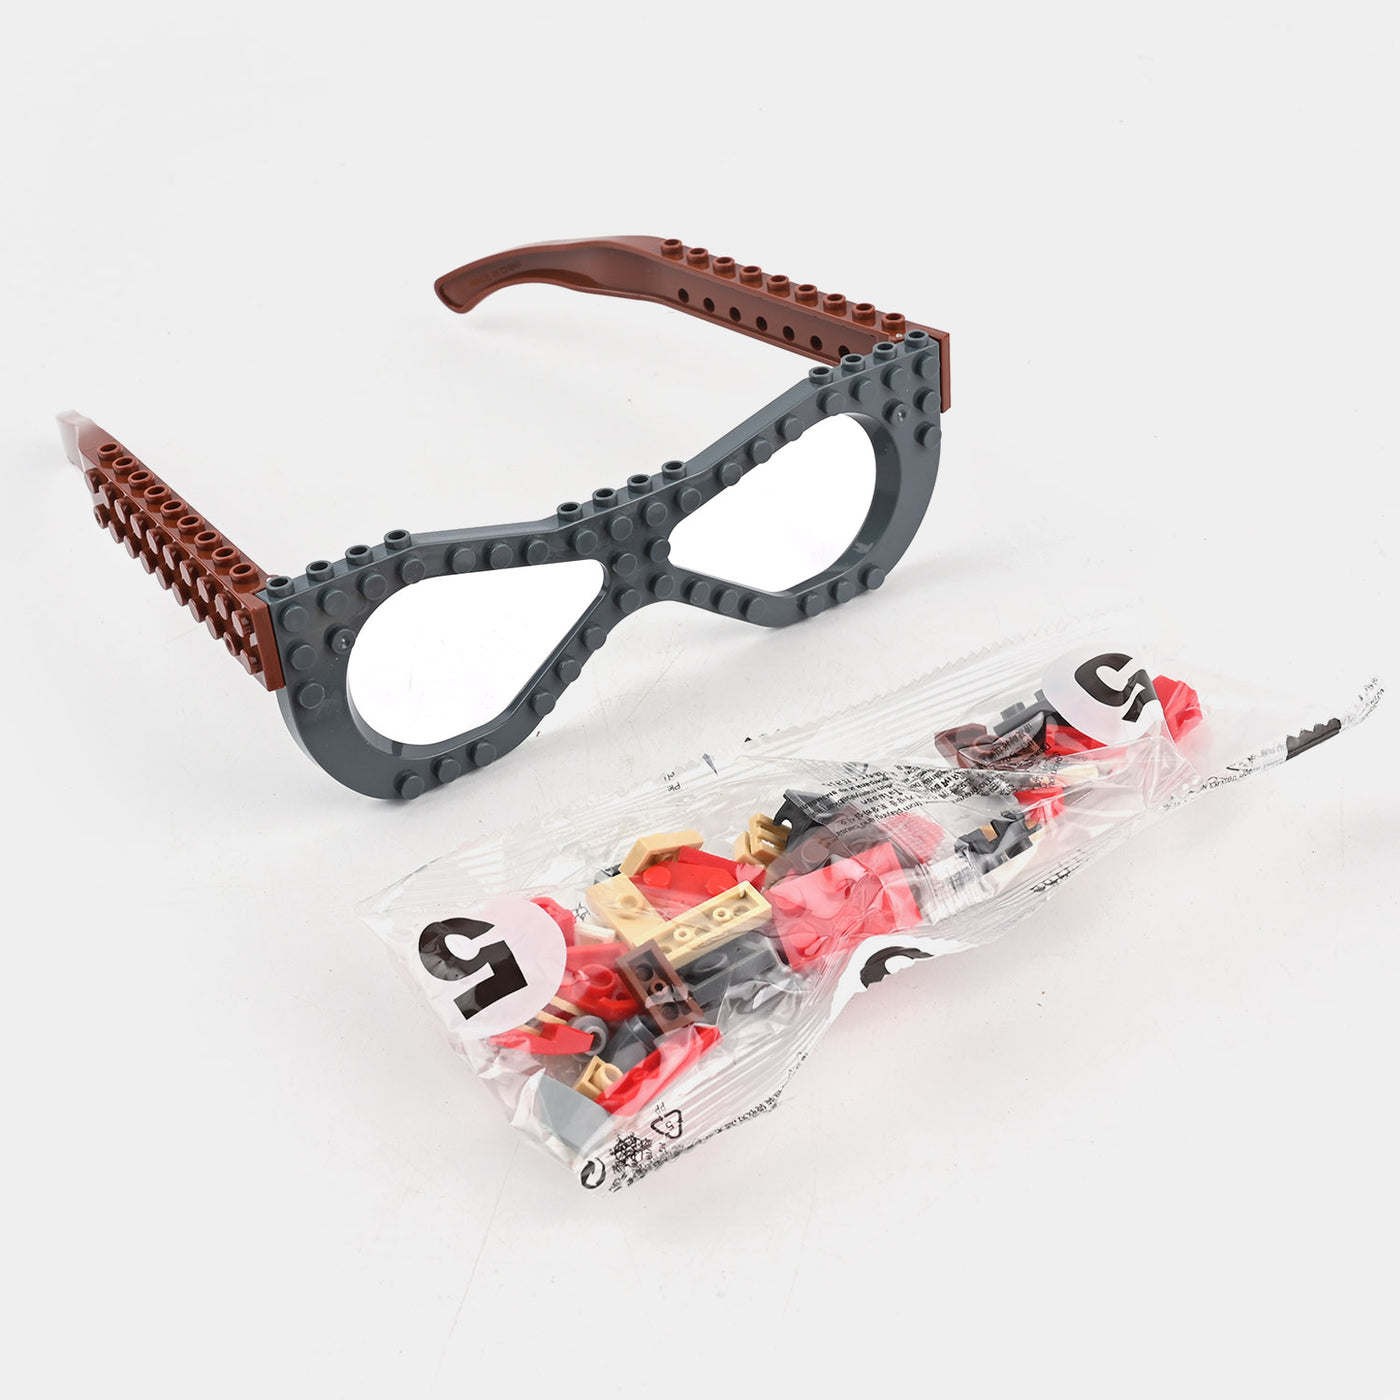 DIY Small Glasses Block | 56PCs